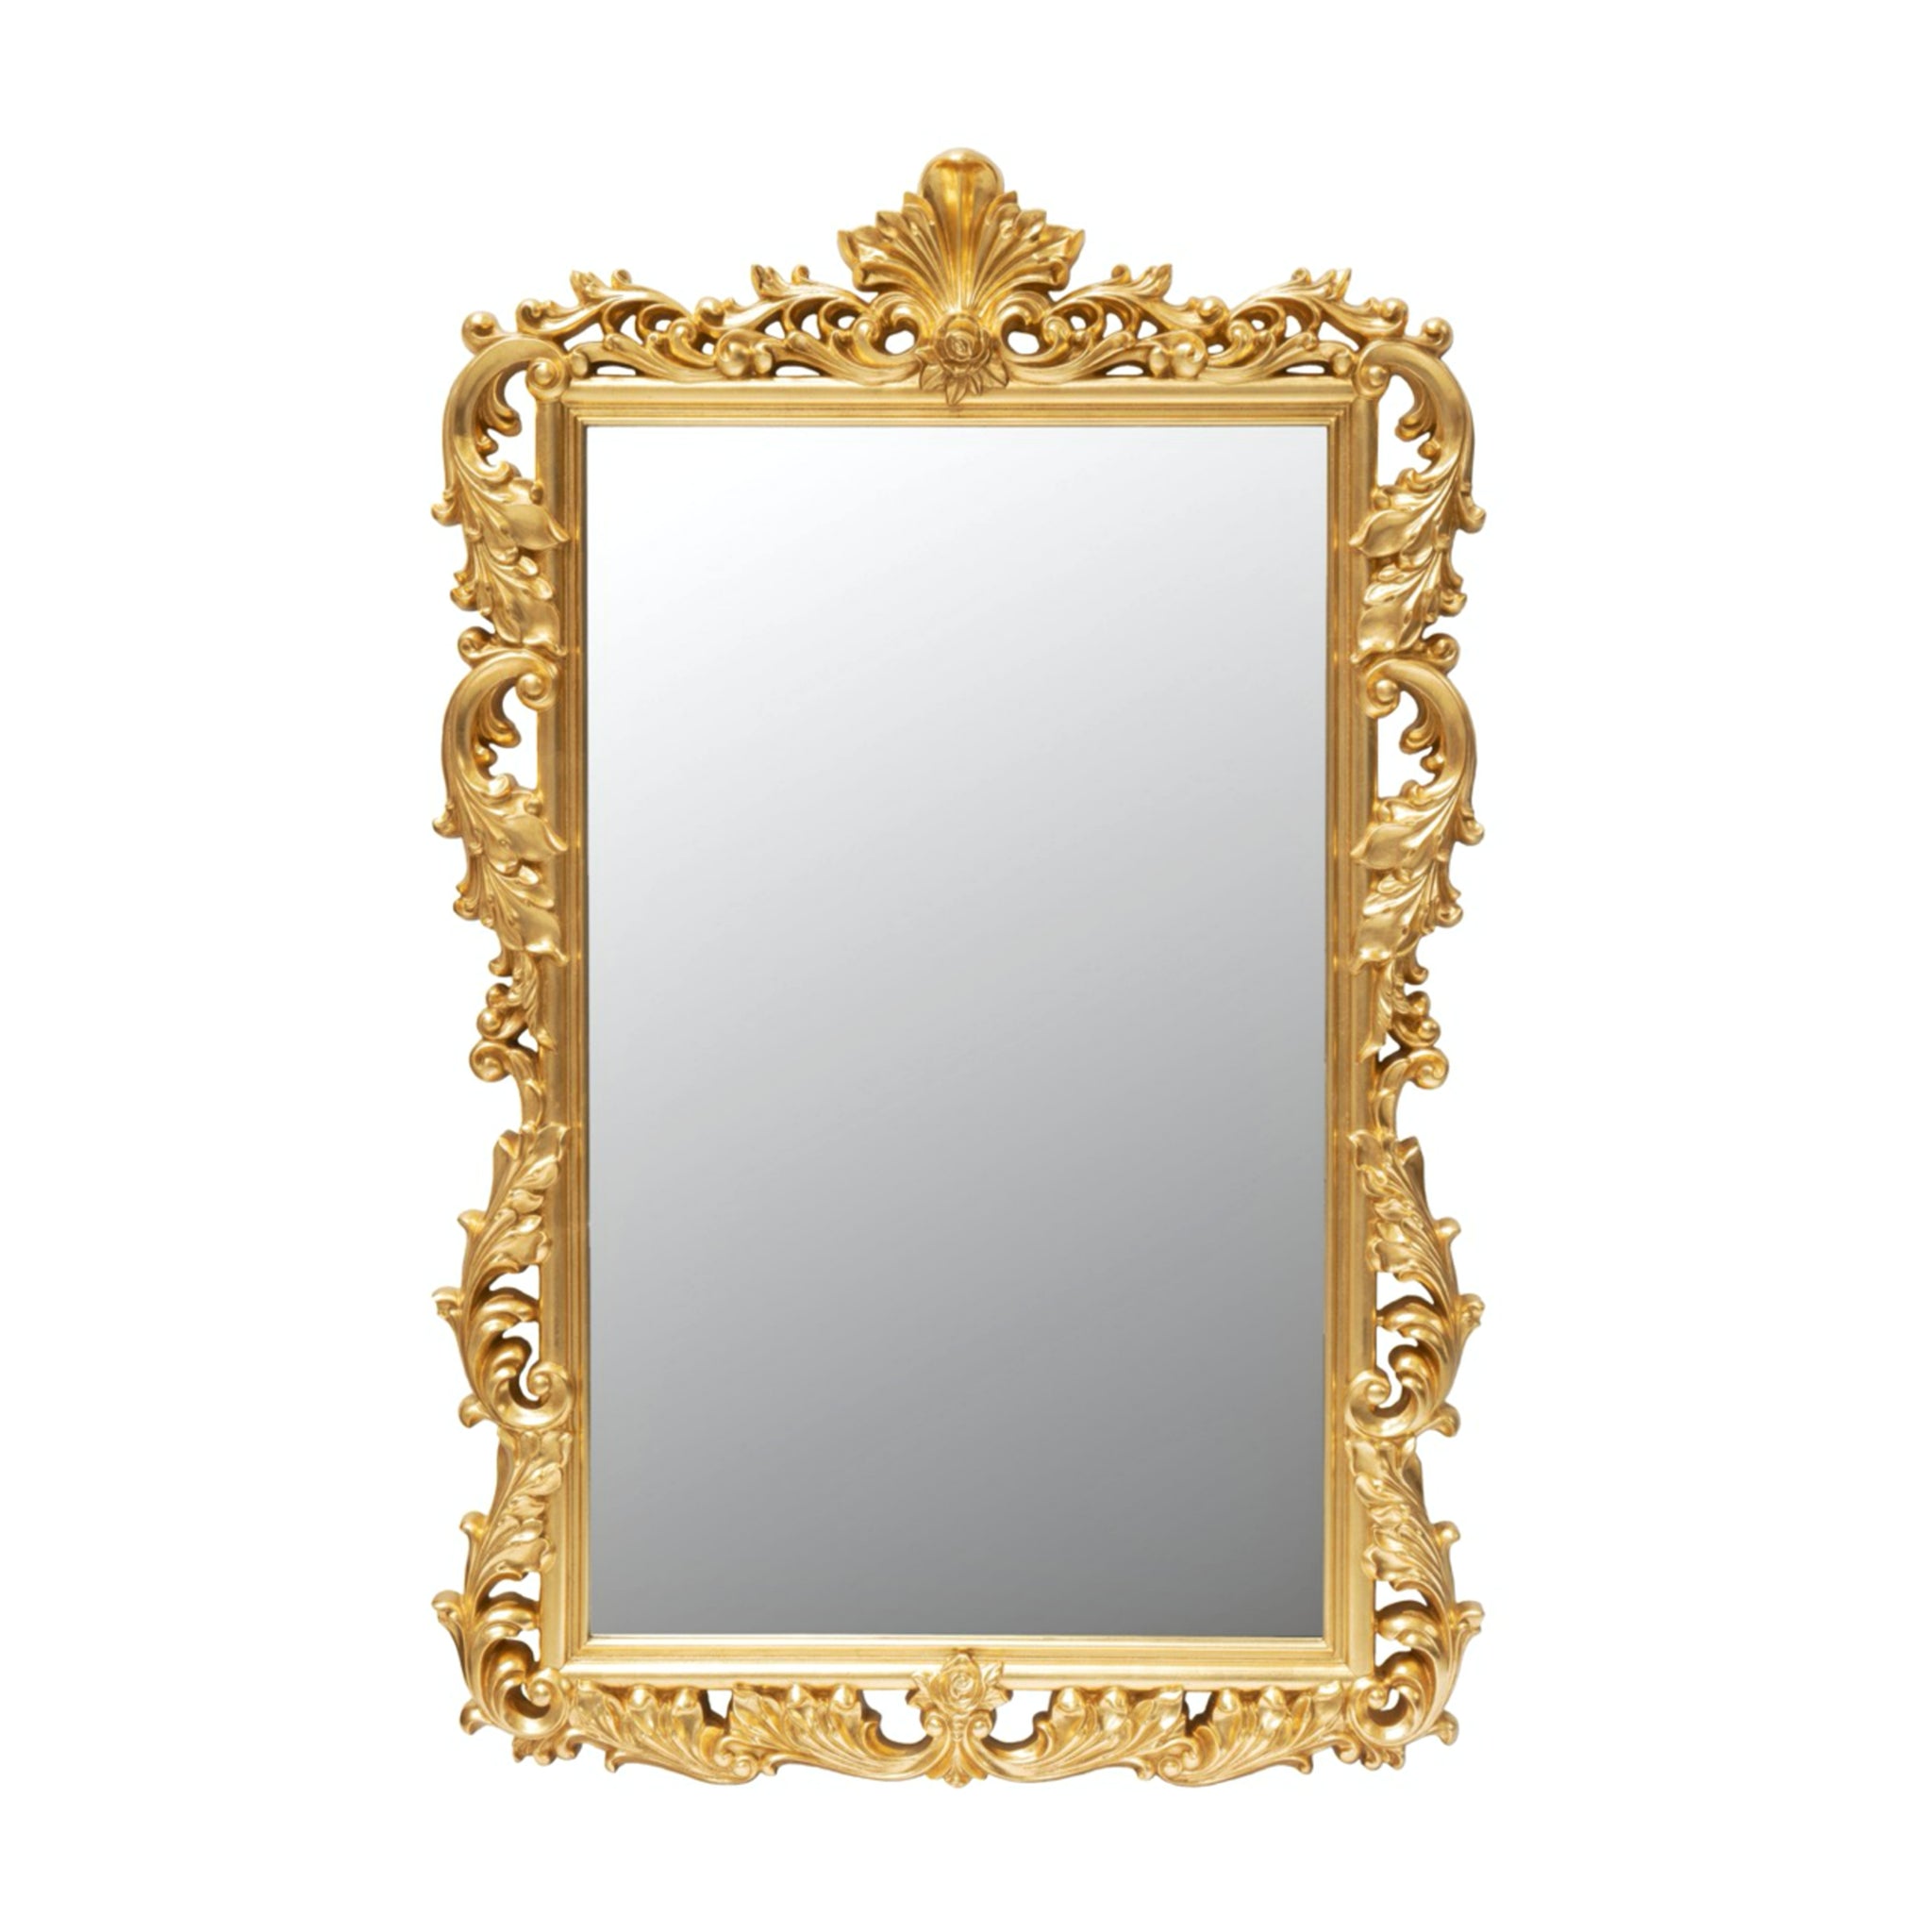 KONRAD INTERIOR SELECTION - Mirror "Royal"